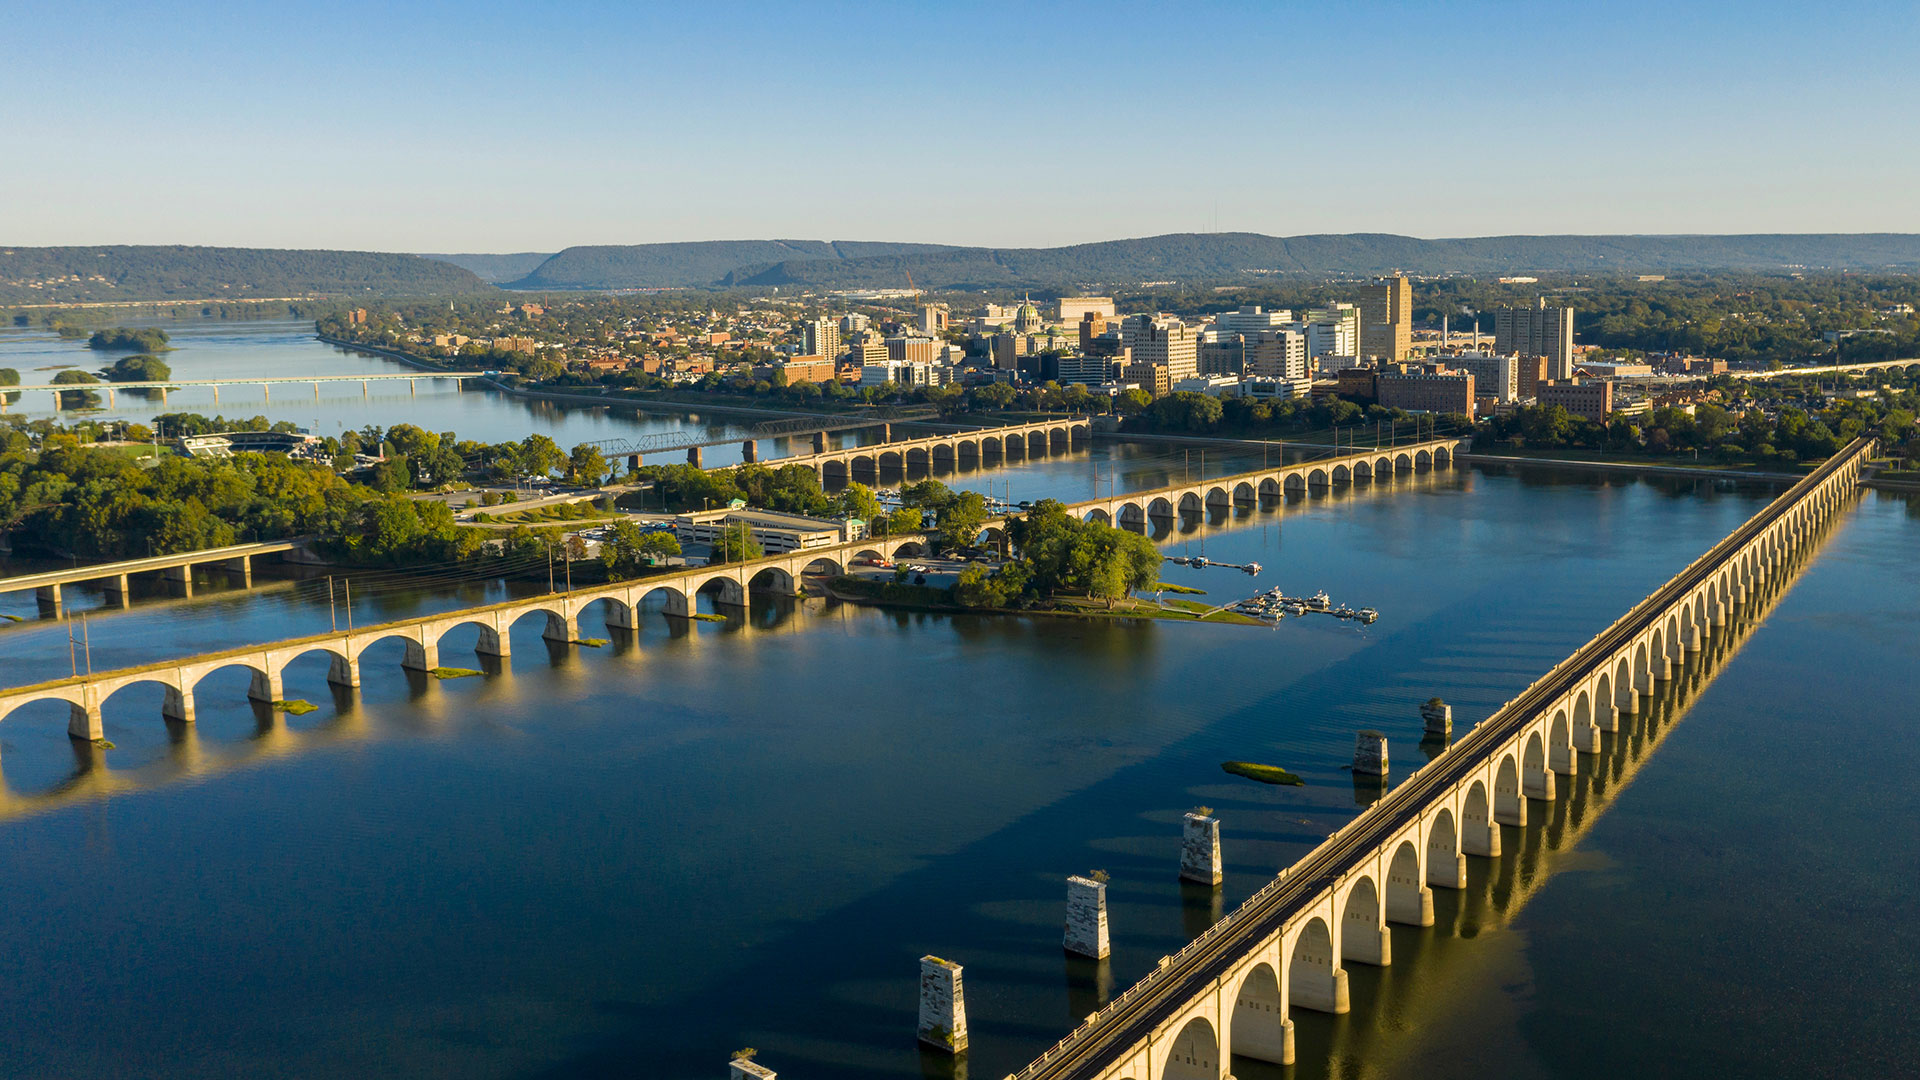 Aerial view of bridges and the Susquehanna River in Harrisburg, Pennsylvania